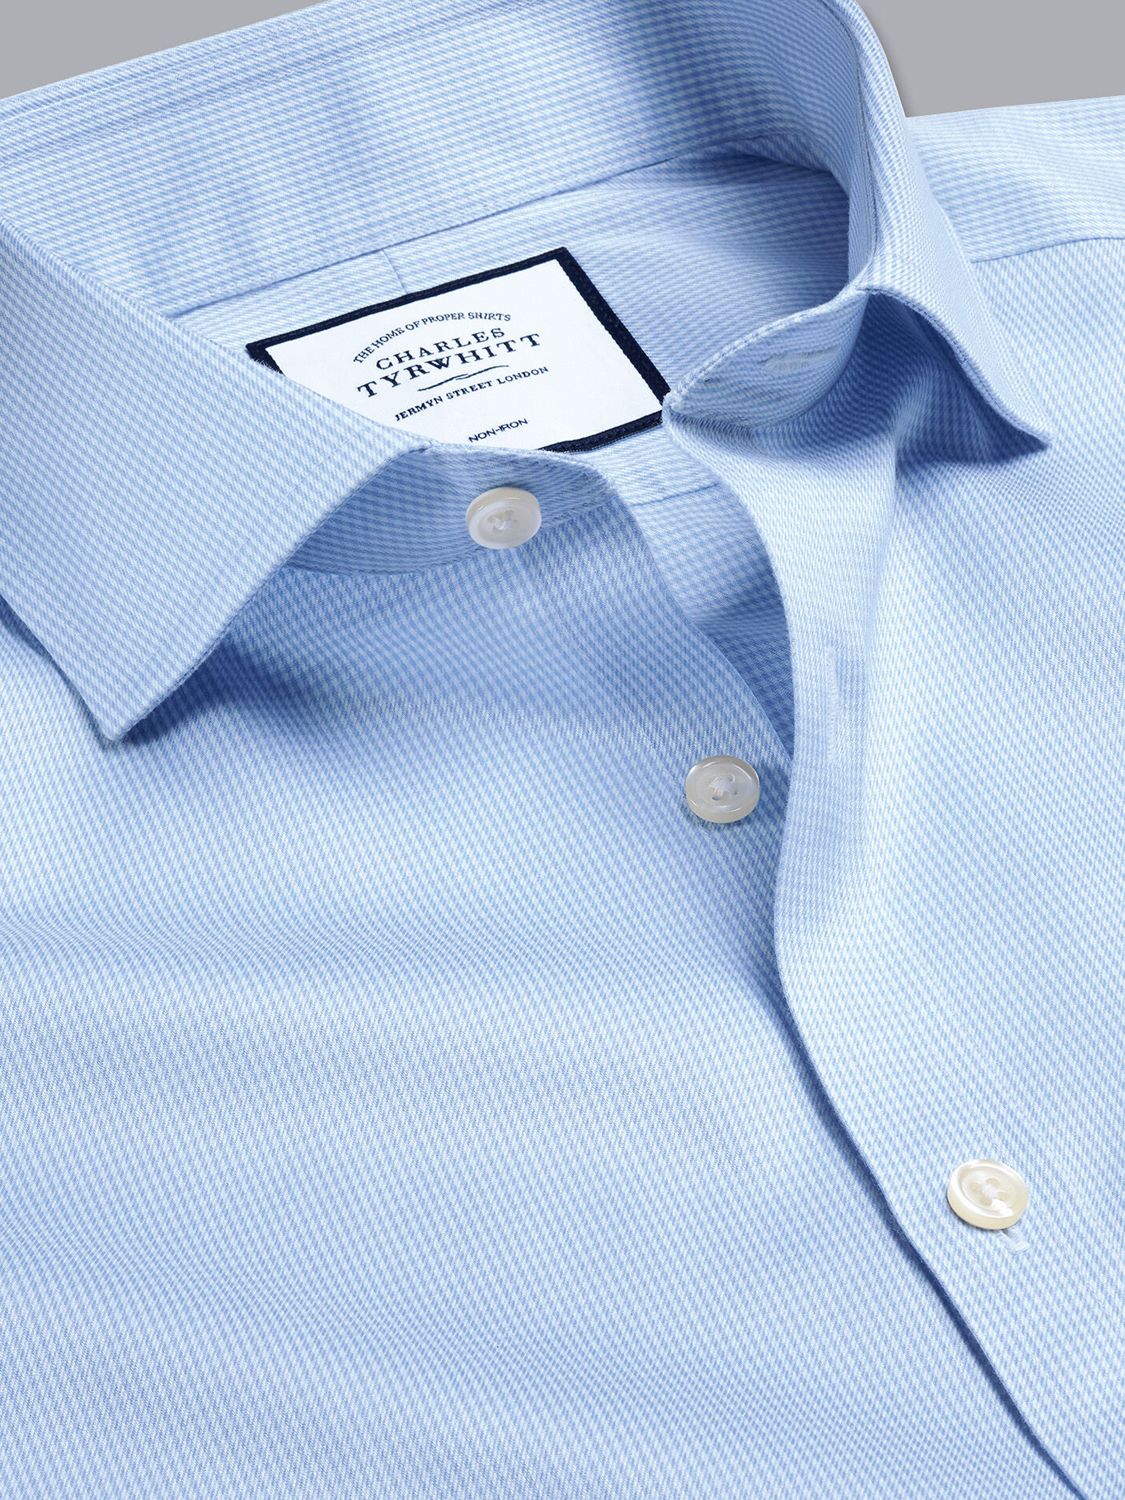 Buy Charles Tyrwhitt Cutaway Collar Non-Iron Puppytooth Slim Fit Shirt, Sky Online at johnlewis.com